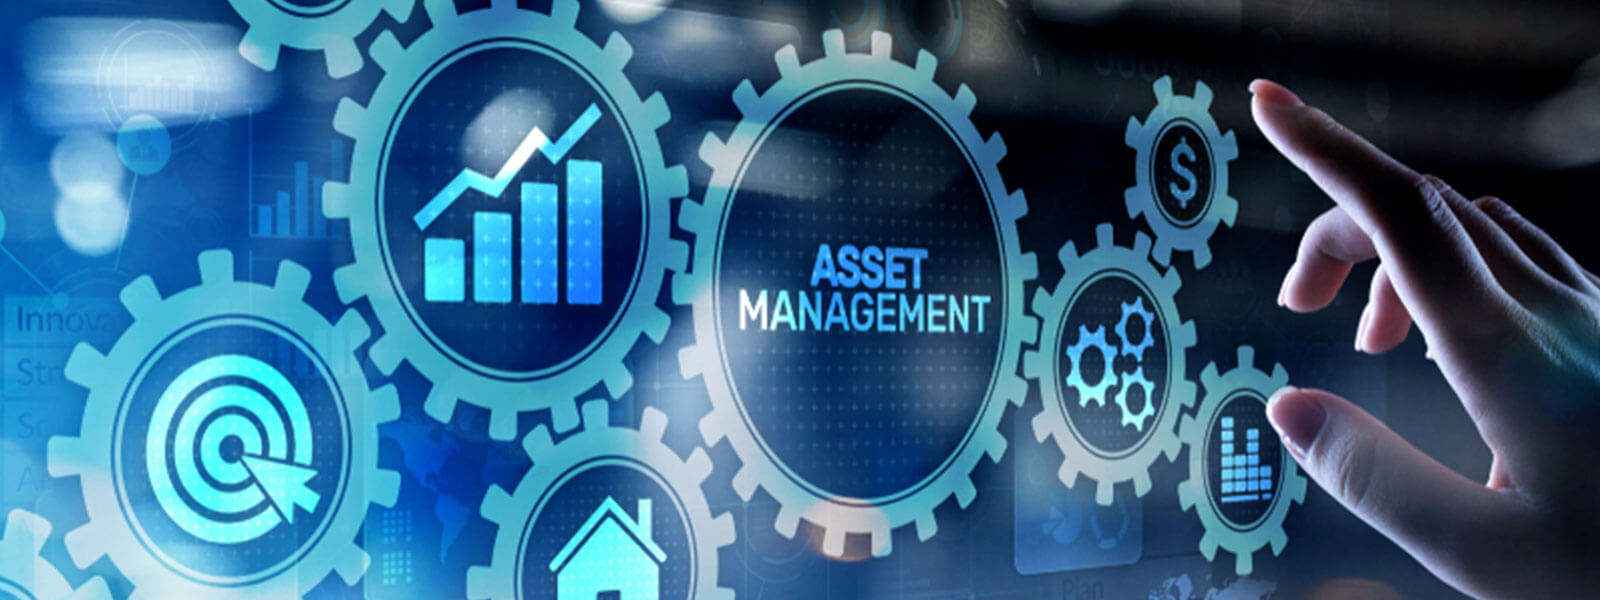 Digital Asset Management Solutions